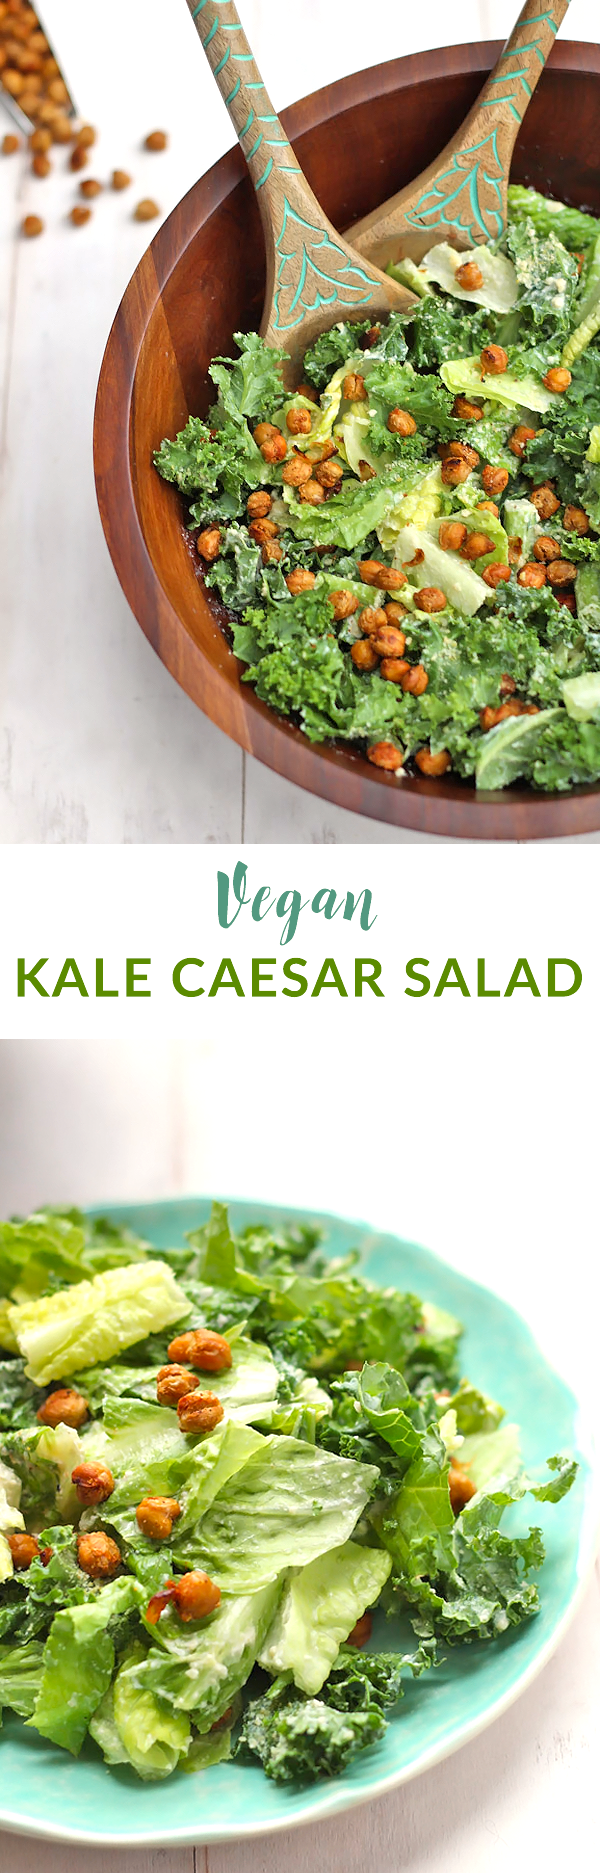 Creamy Kale Vegan Caesar Salad - fresh caesar salad with an AMAZING creamy dairy-free dressing and crispy chickpea croutons!